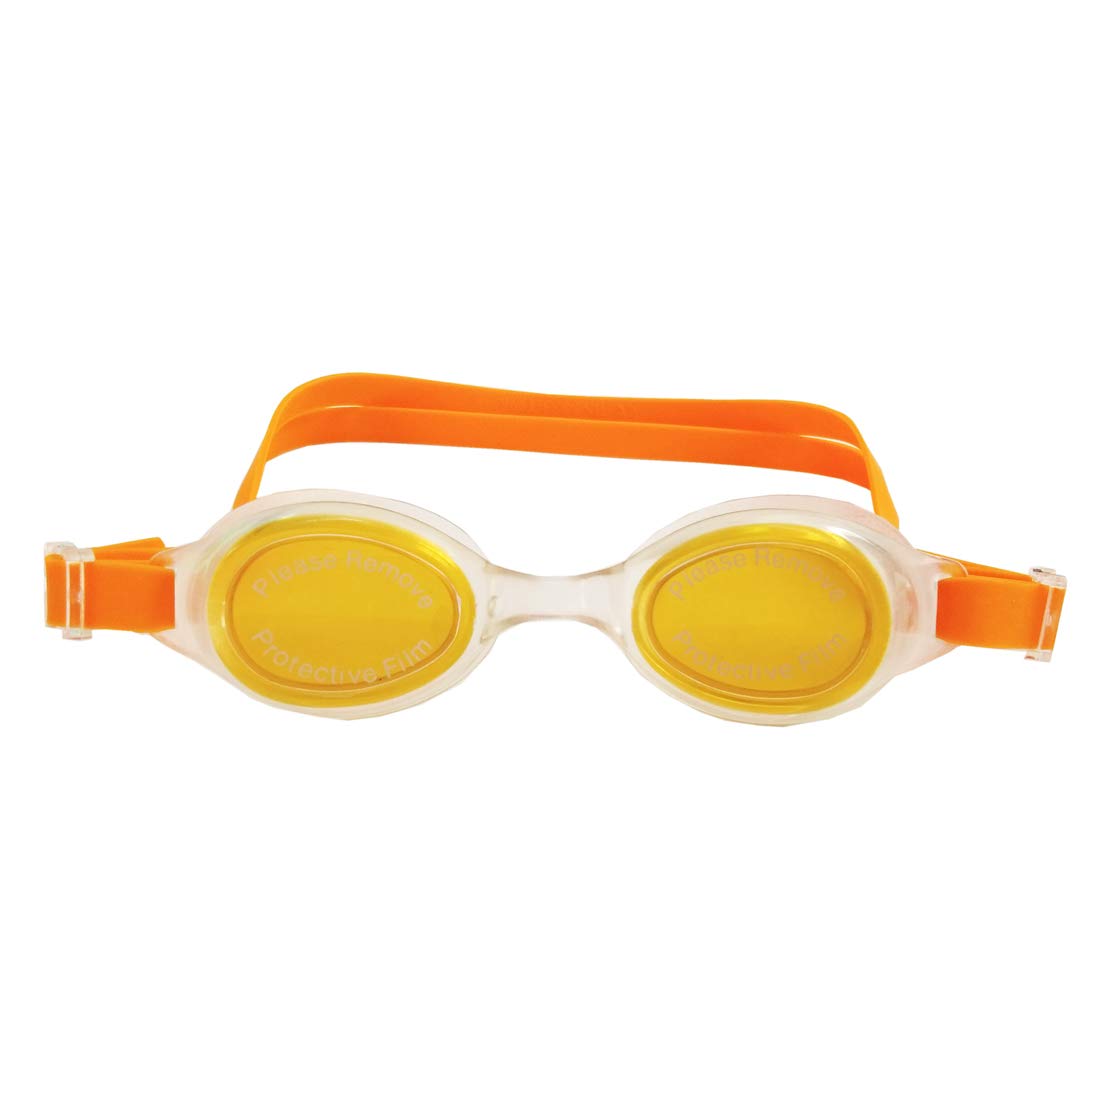 Senior Sports Swimming Set (Cap + Goggles + Earplugs) - Best Price online Prokicksports.com